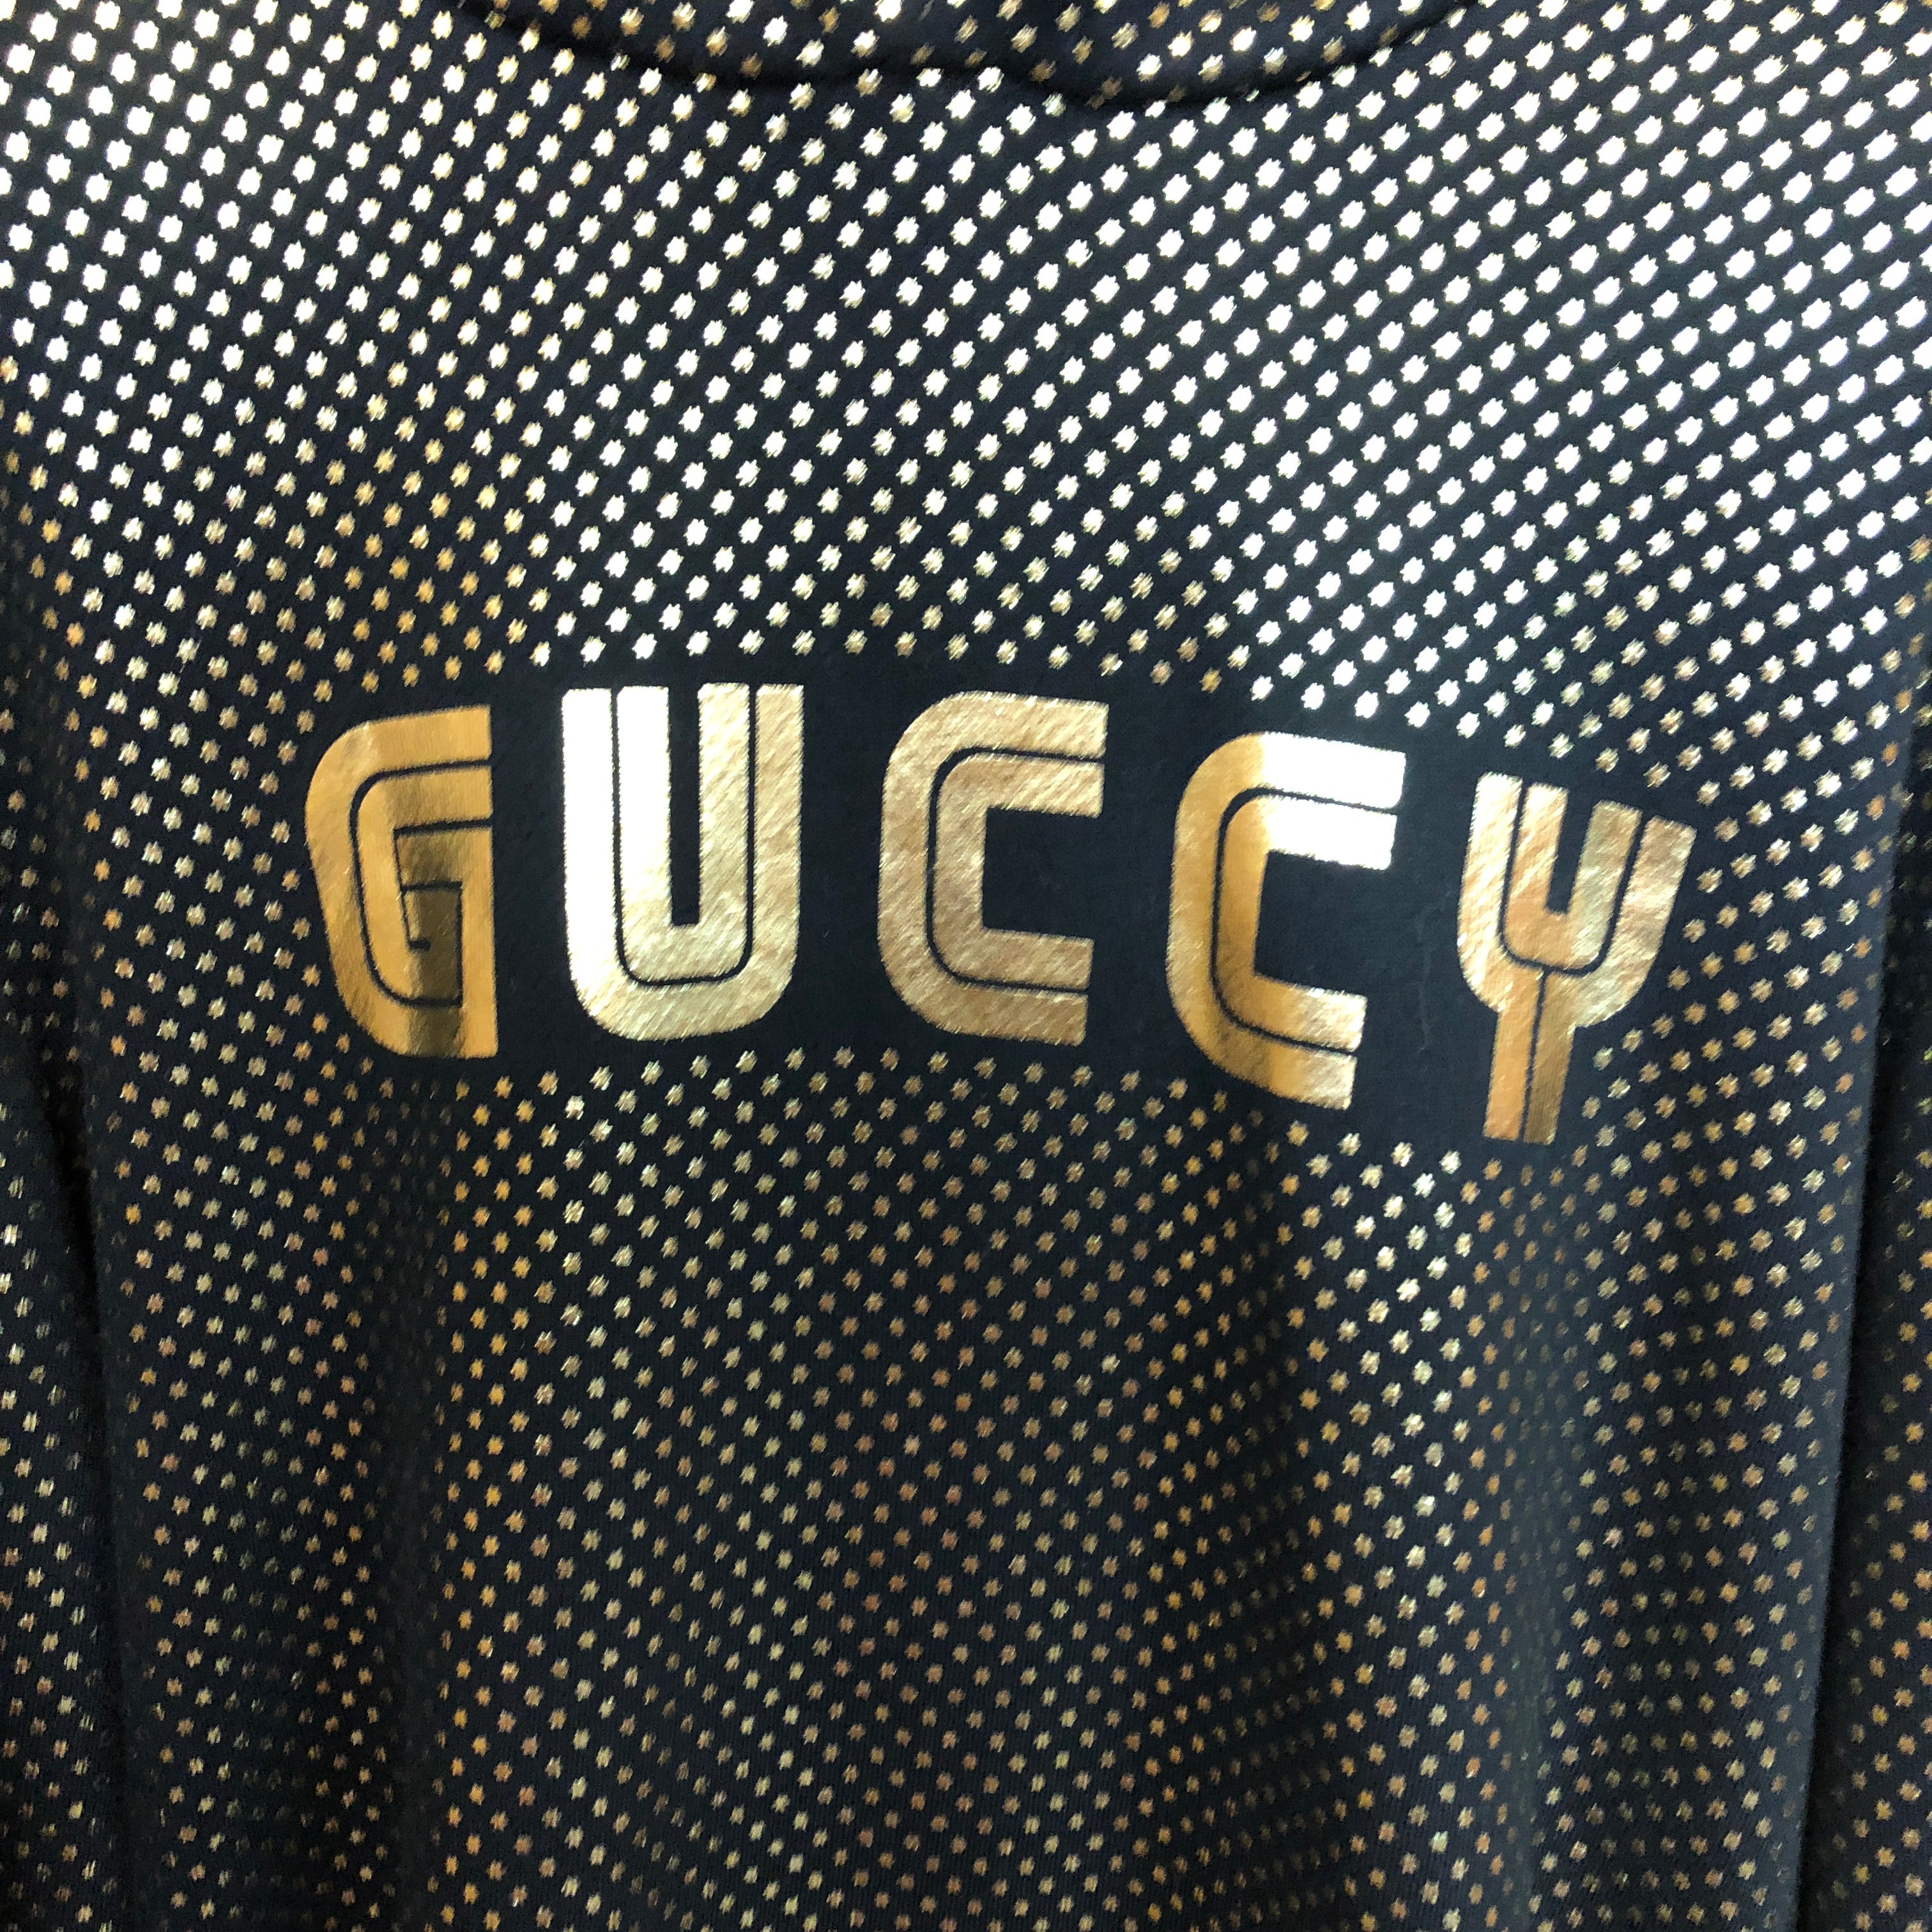 GUCCI gold star hoody sweatshirt!